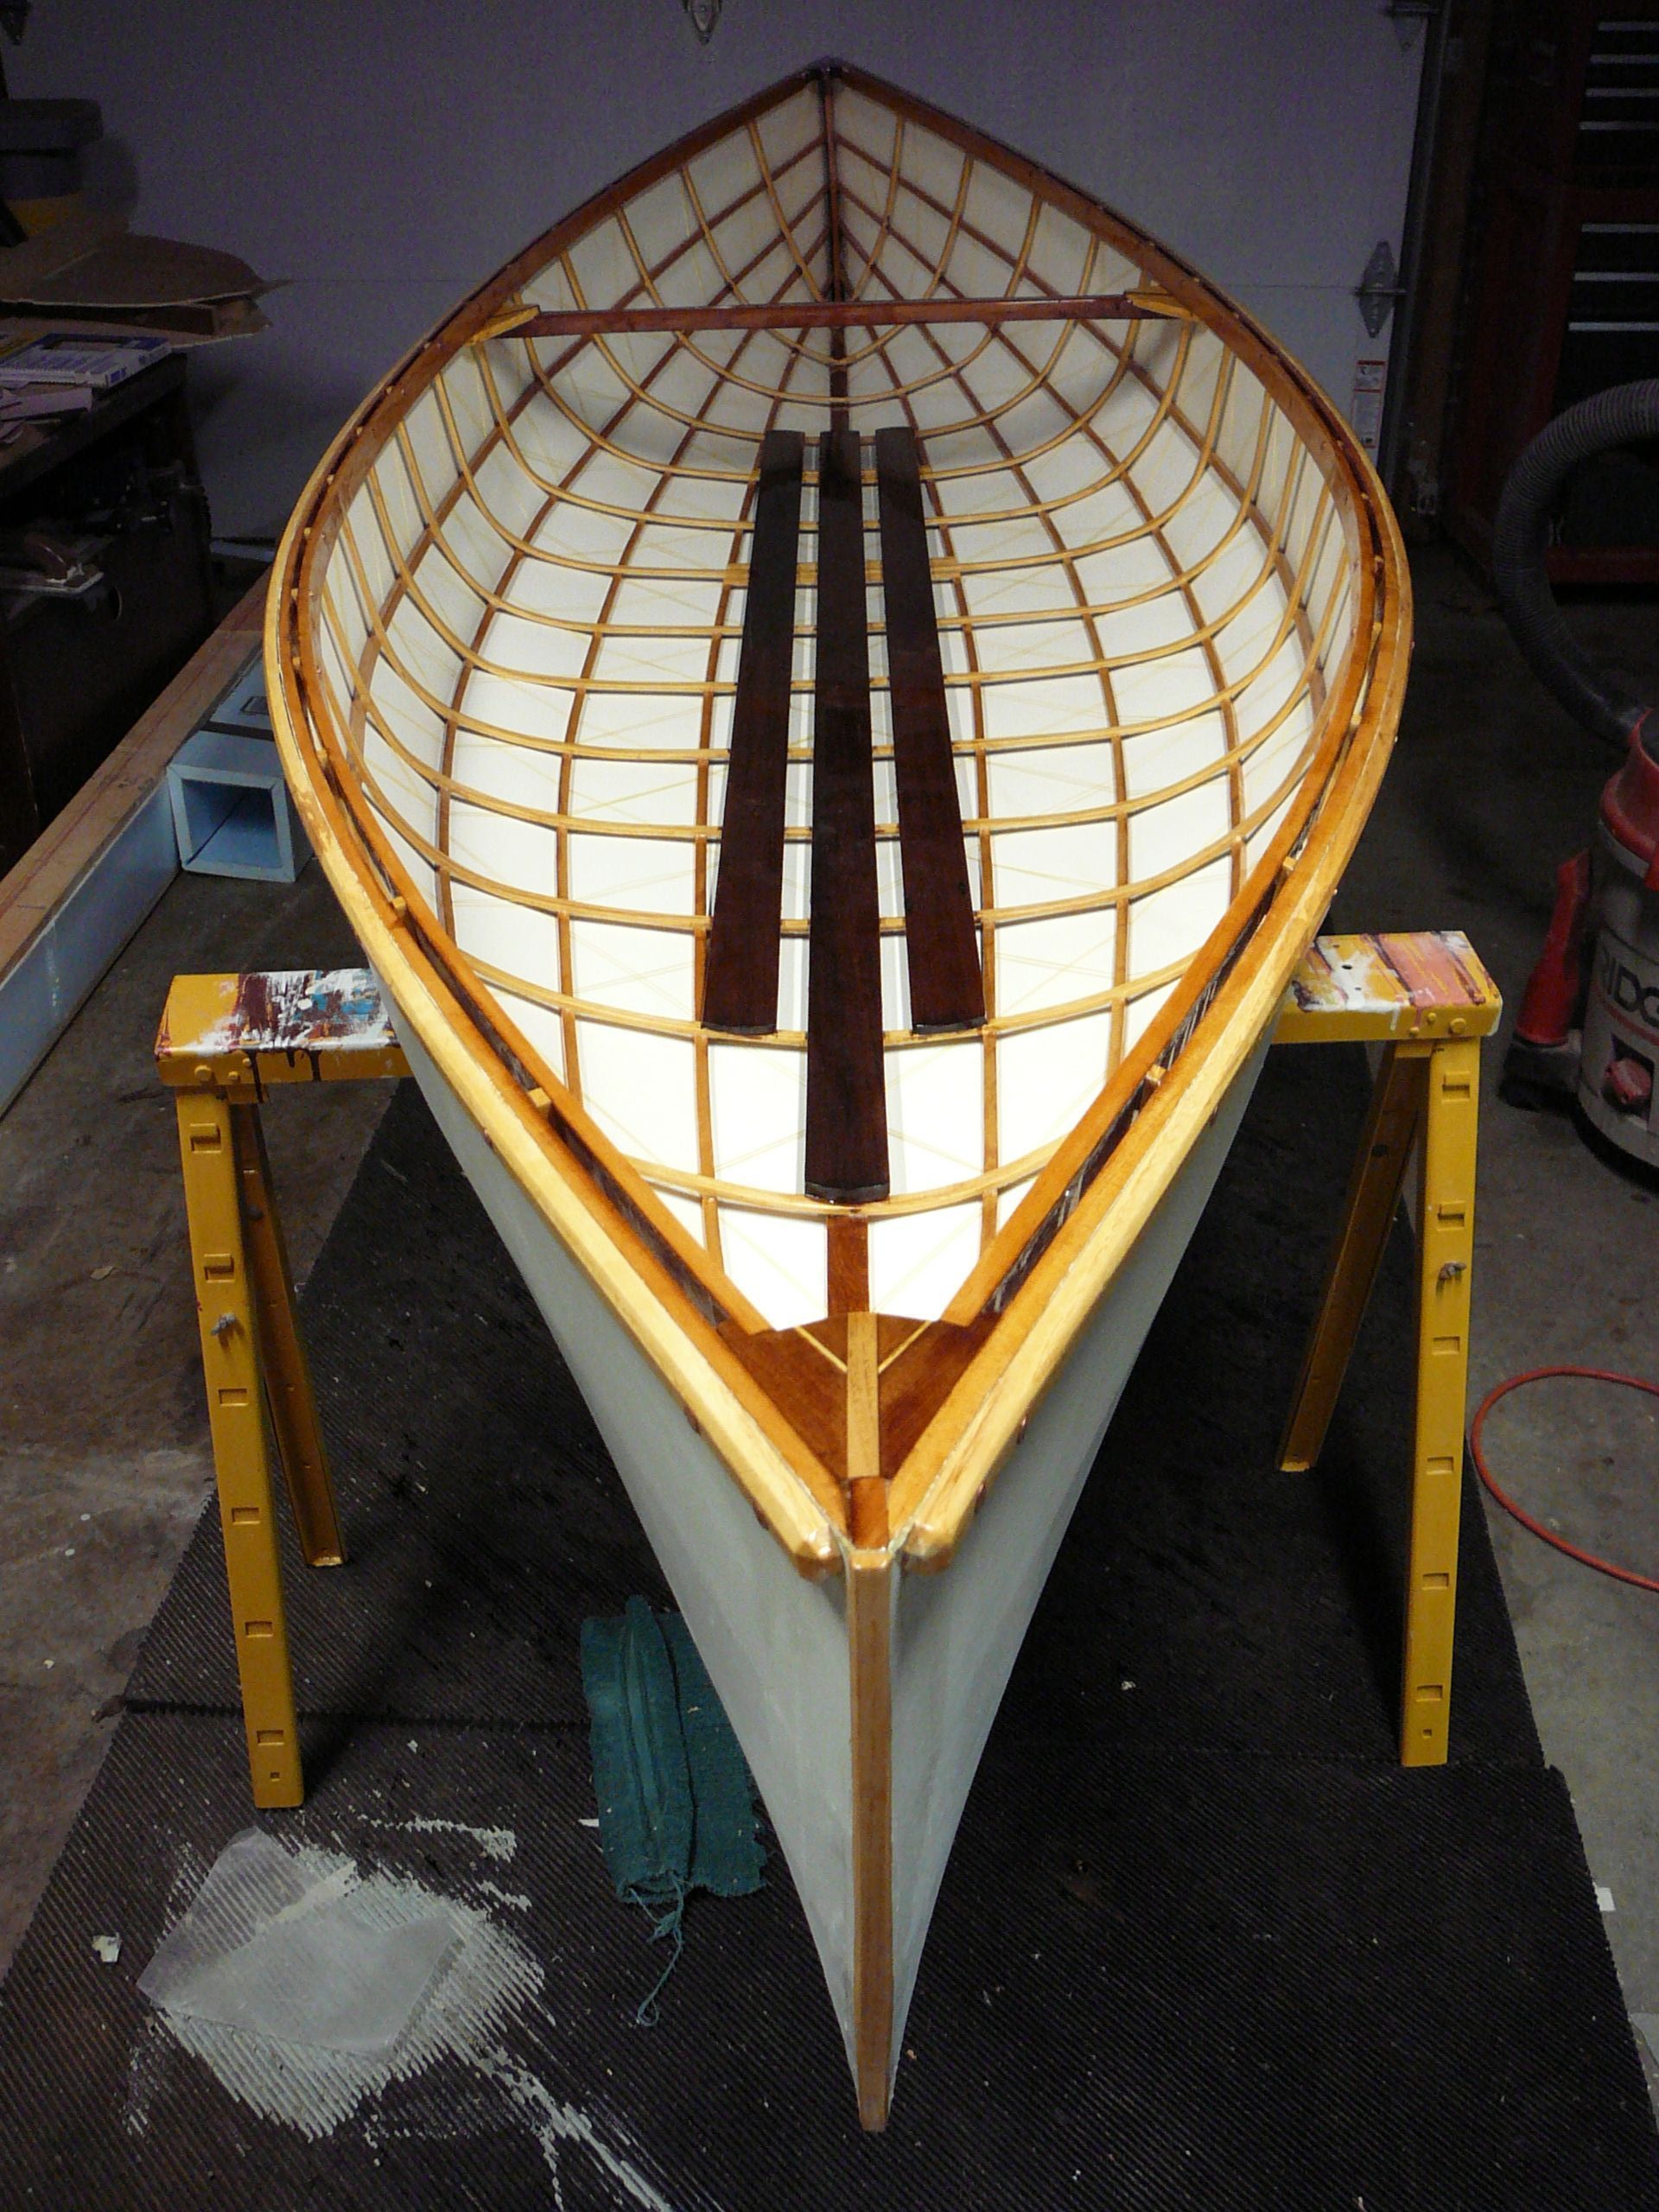 Canoe Work in Progress